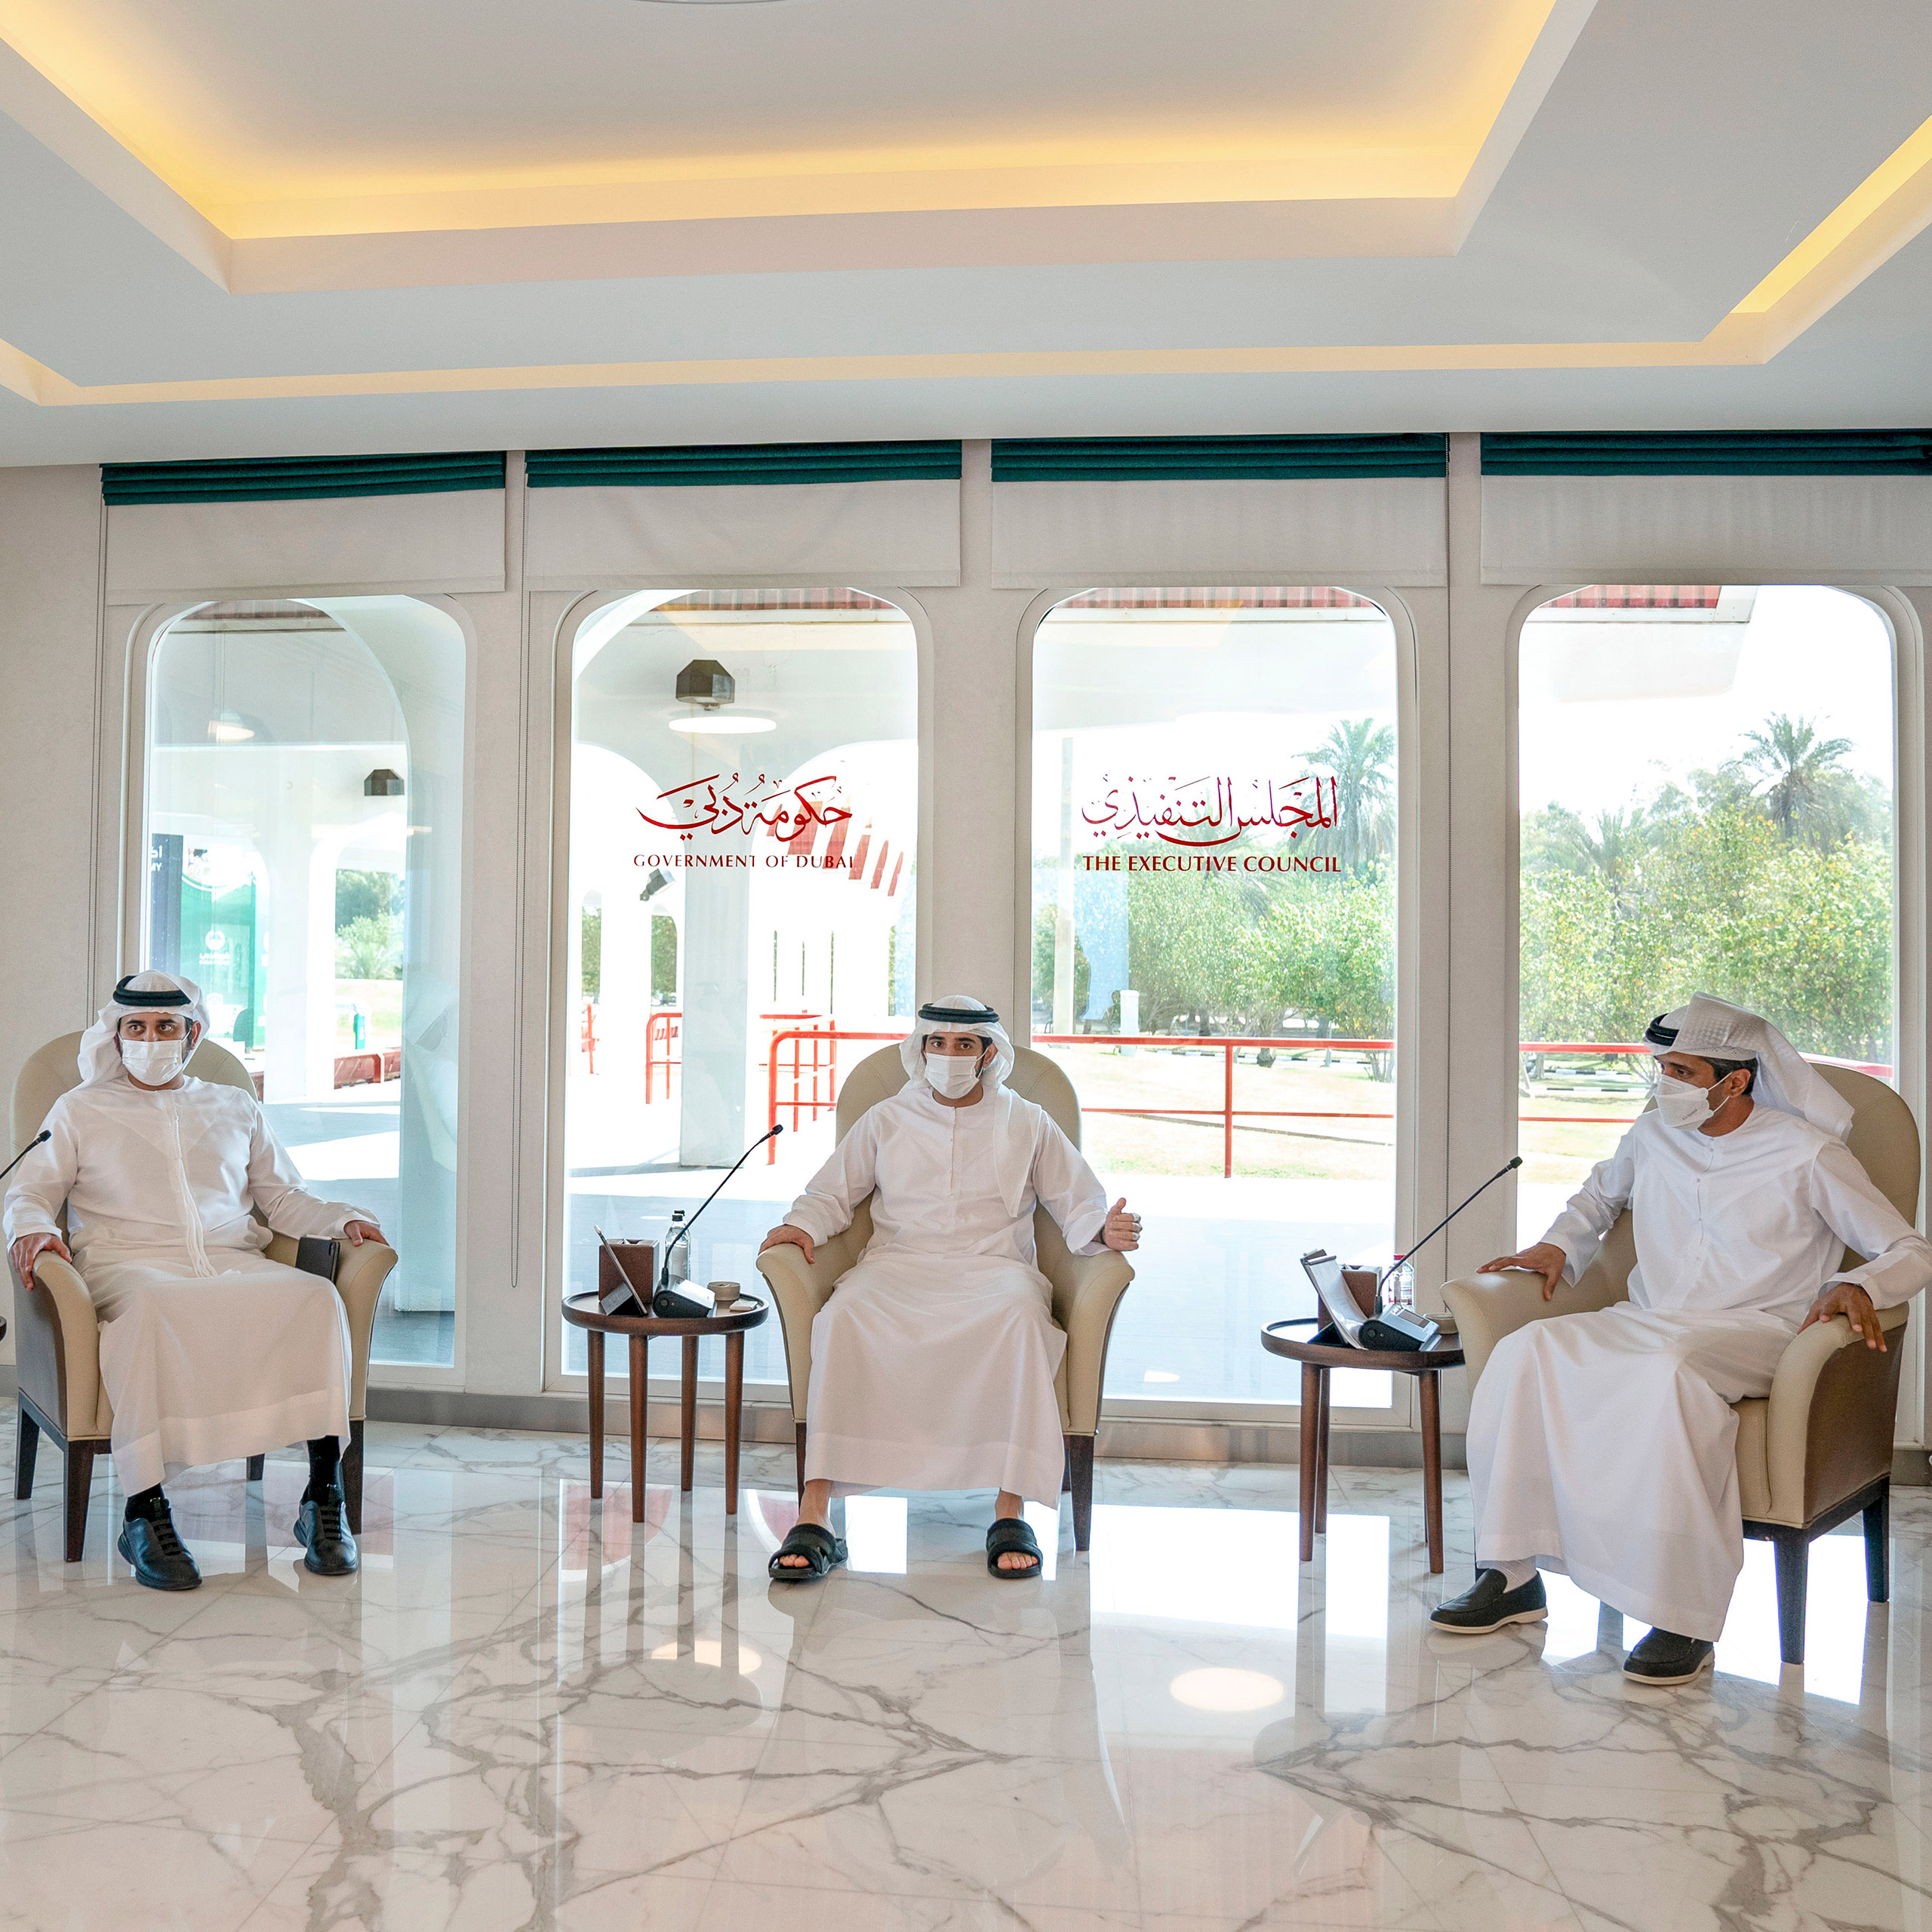 Paperworld Middle East Industry News - Dubai launches new school model focused on Emirati values, Arabic language